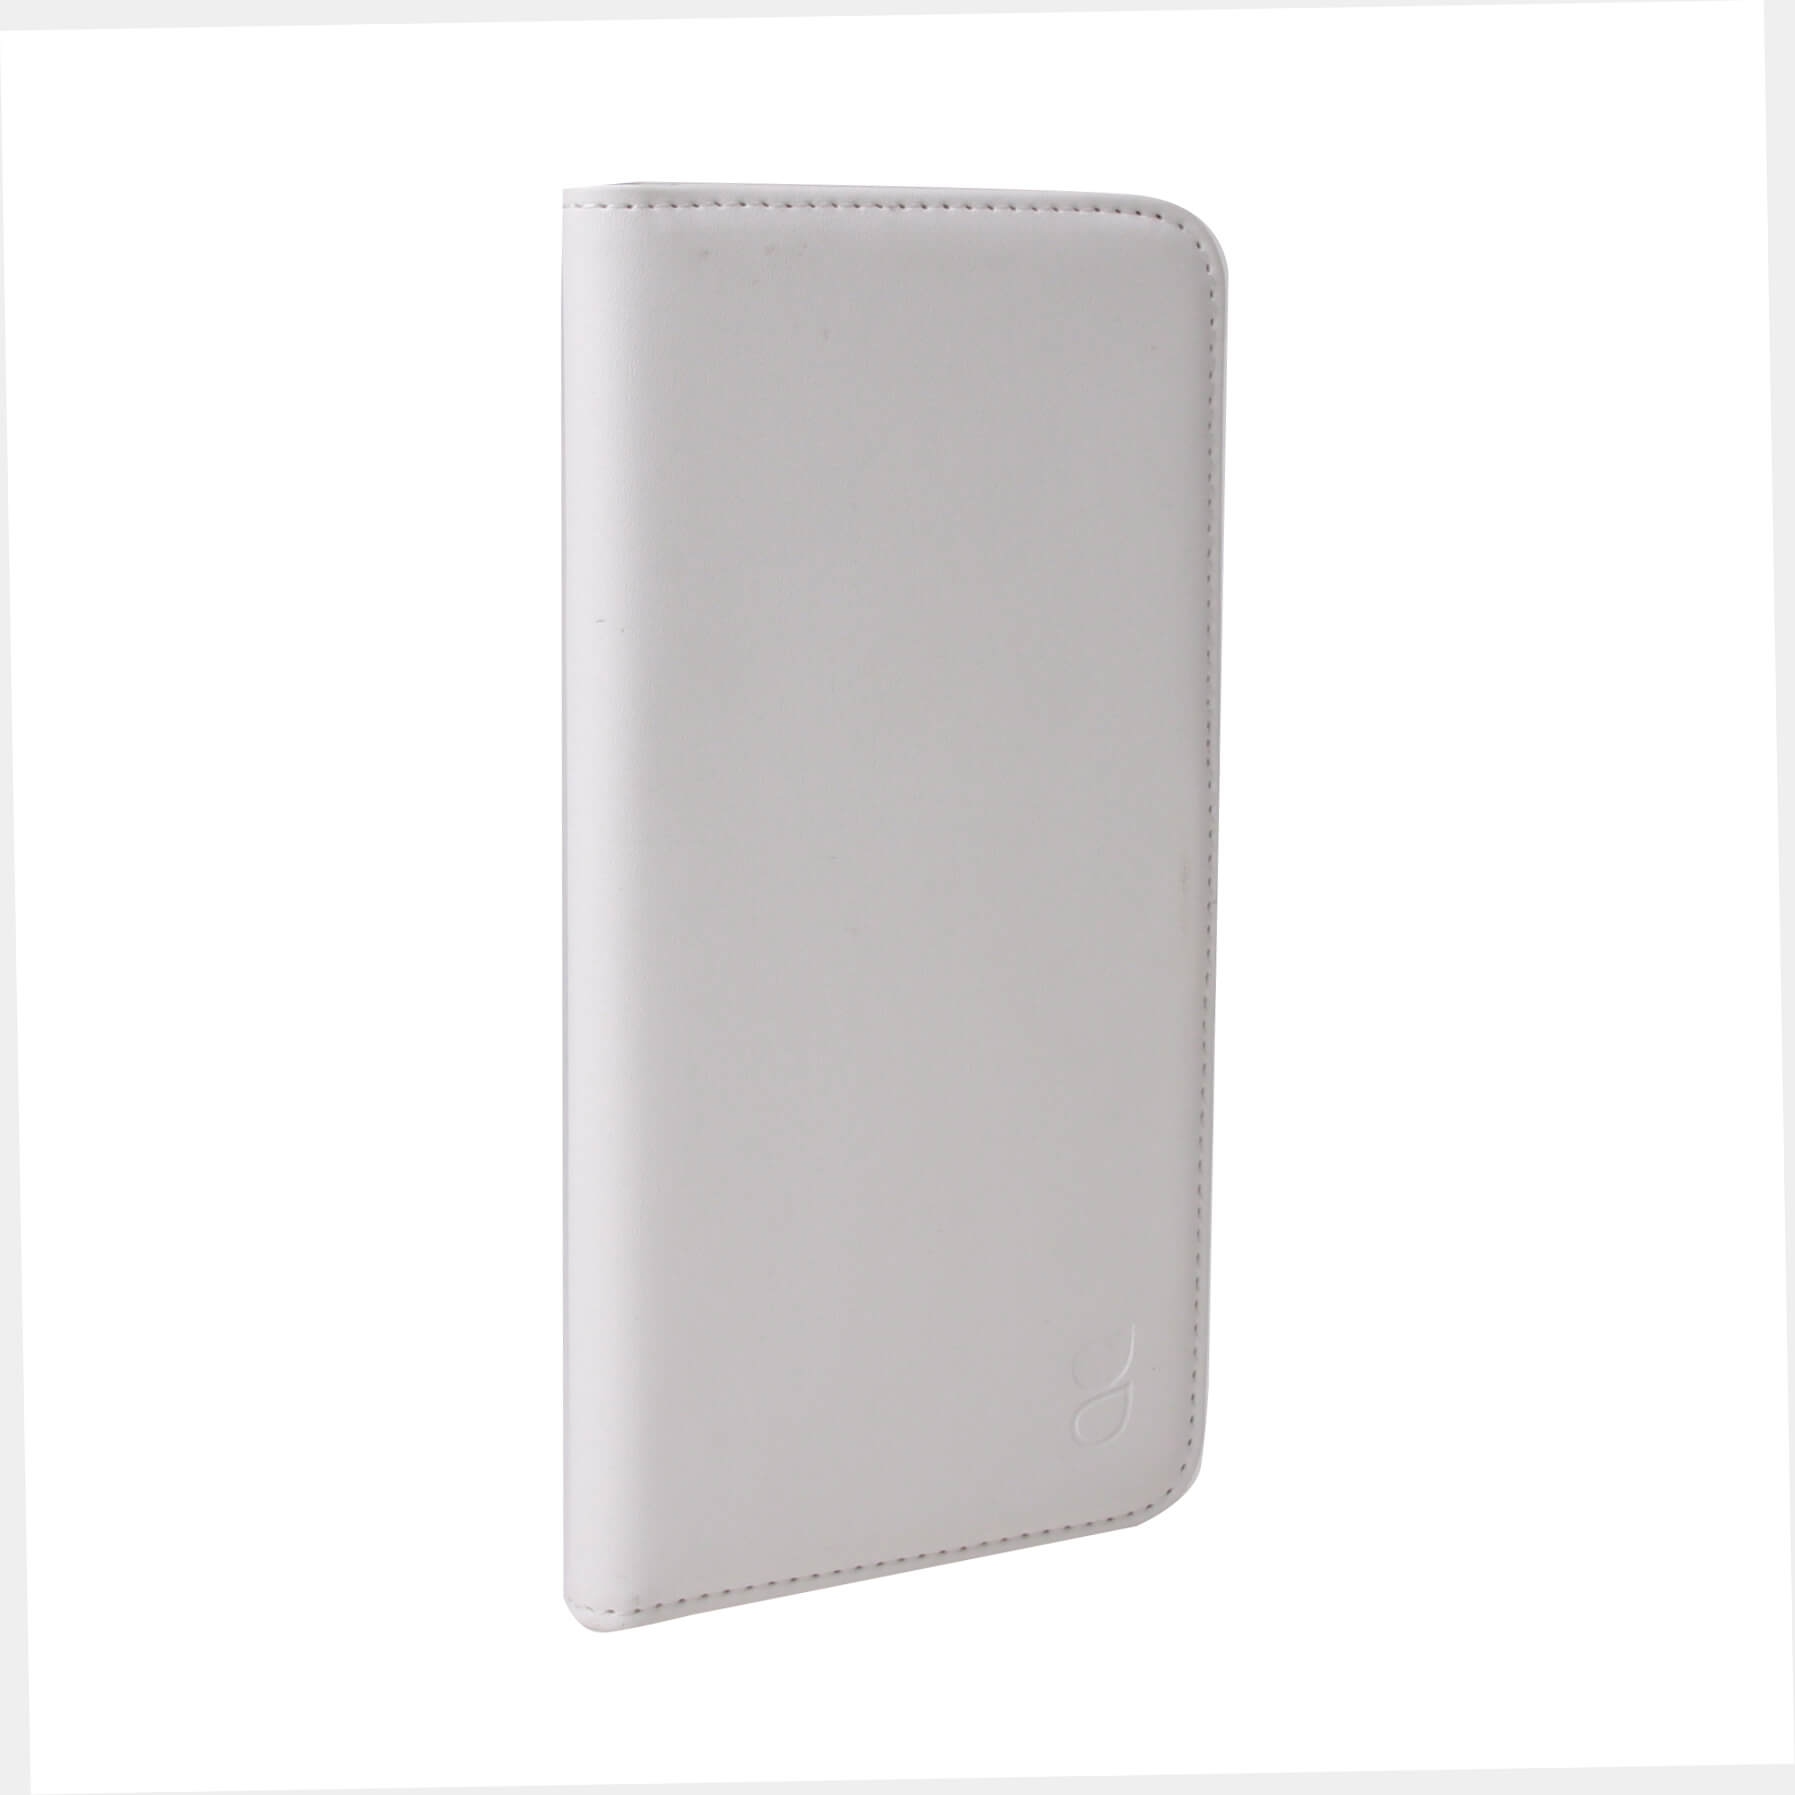 Wallet Case White - iPhone 6 Plus 